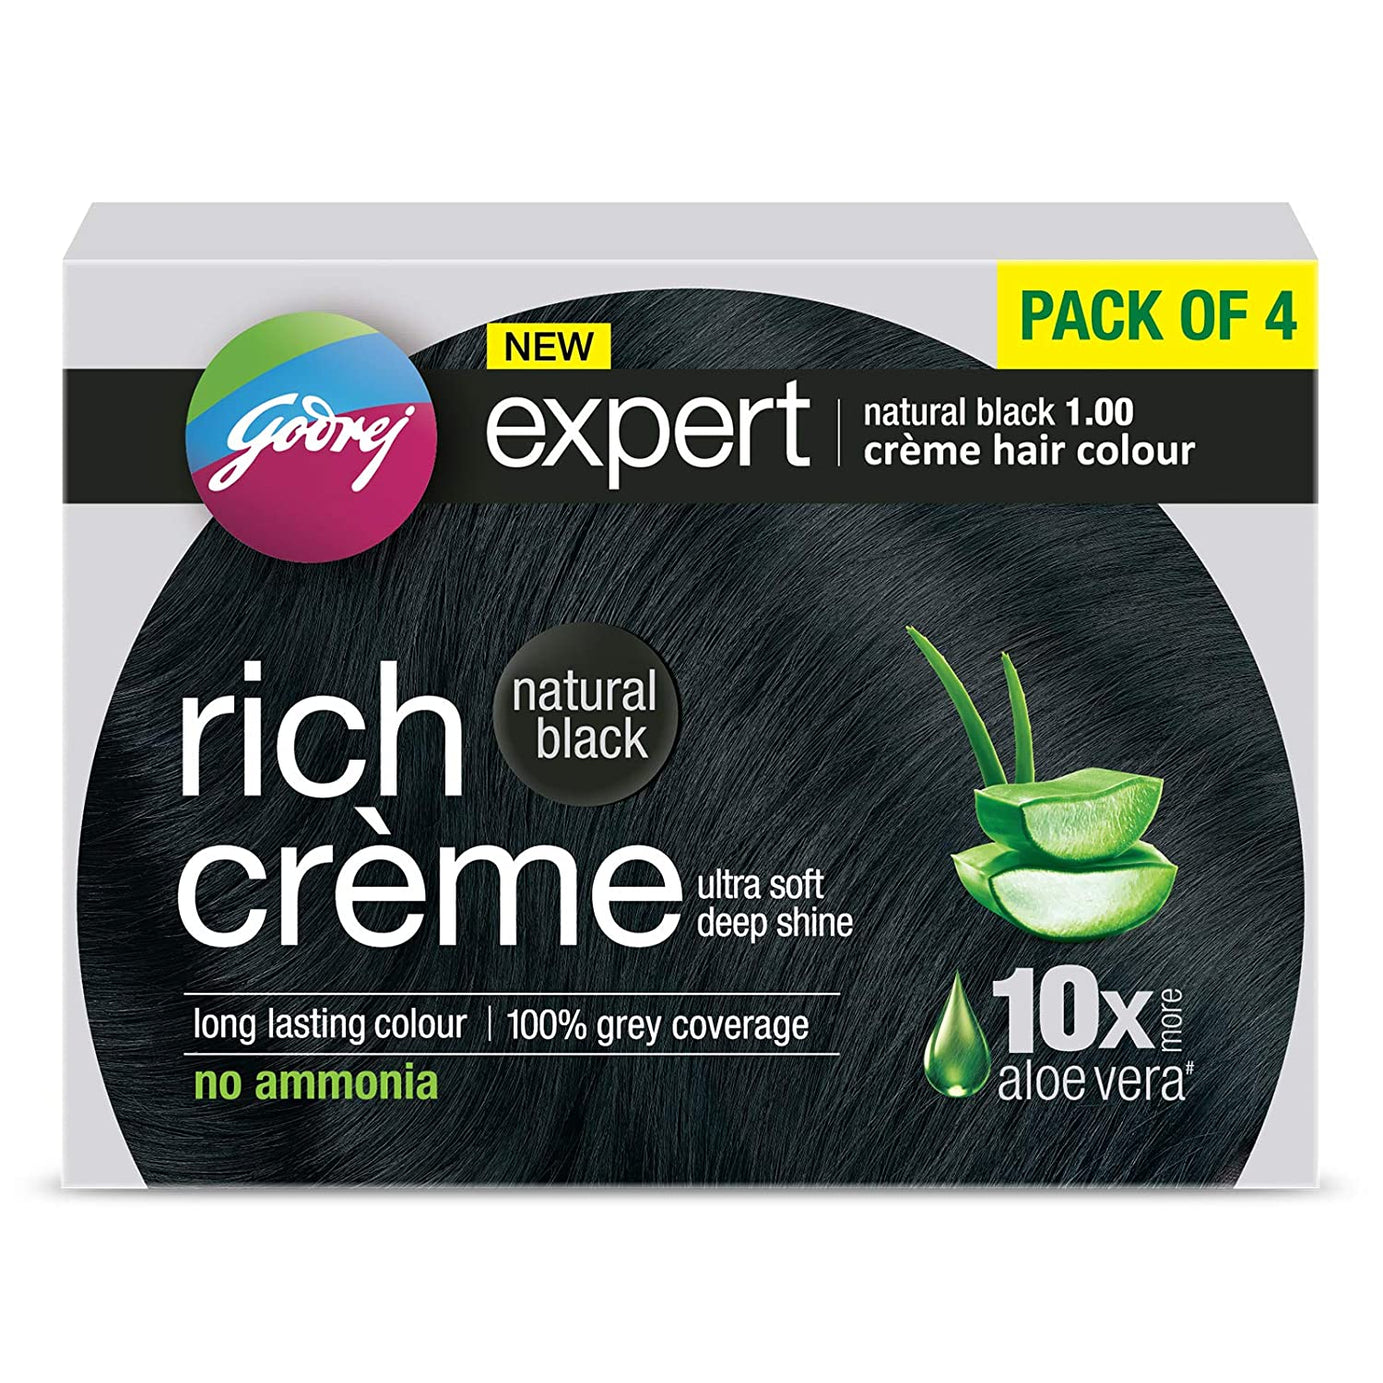 Shop Godrej Expert Rich Creme Hair Colour Natural Black, Pack of 4 at price 120.00 from Godrej Online - Ayush Care